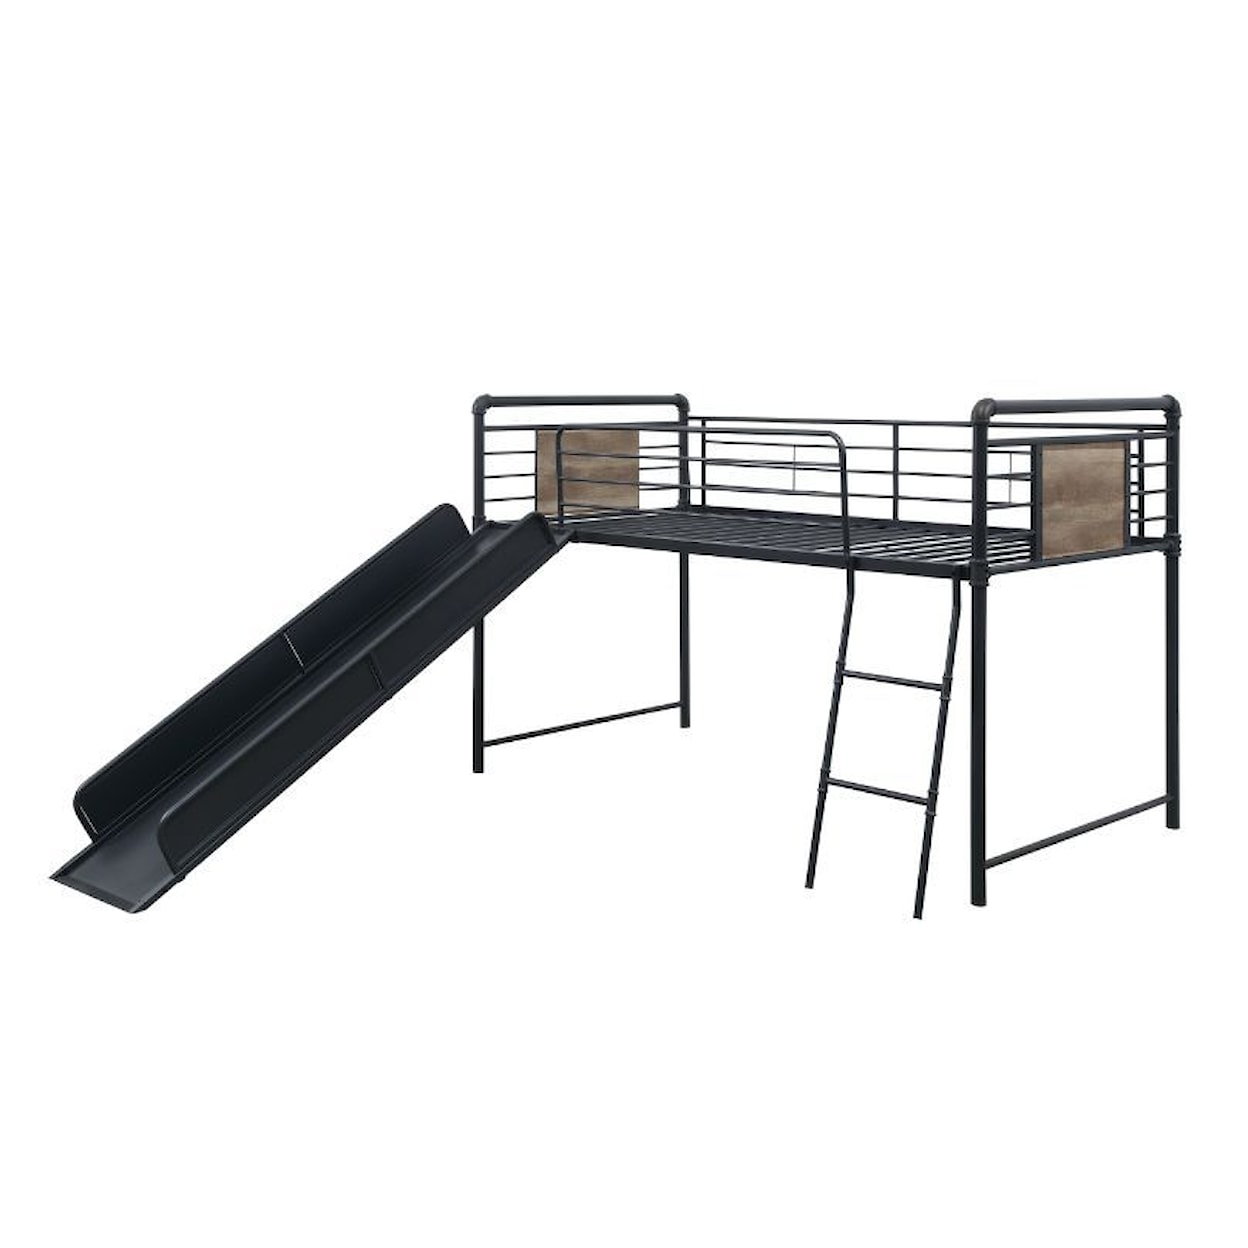 Acme Furniture Cordelia Twin Loft Bed w/ Slide